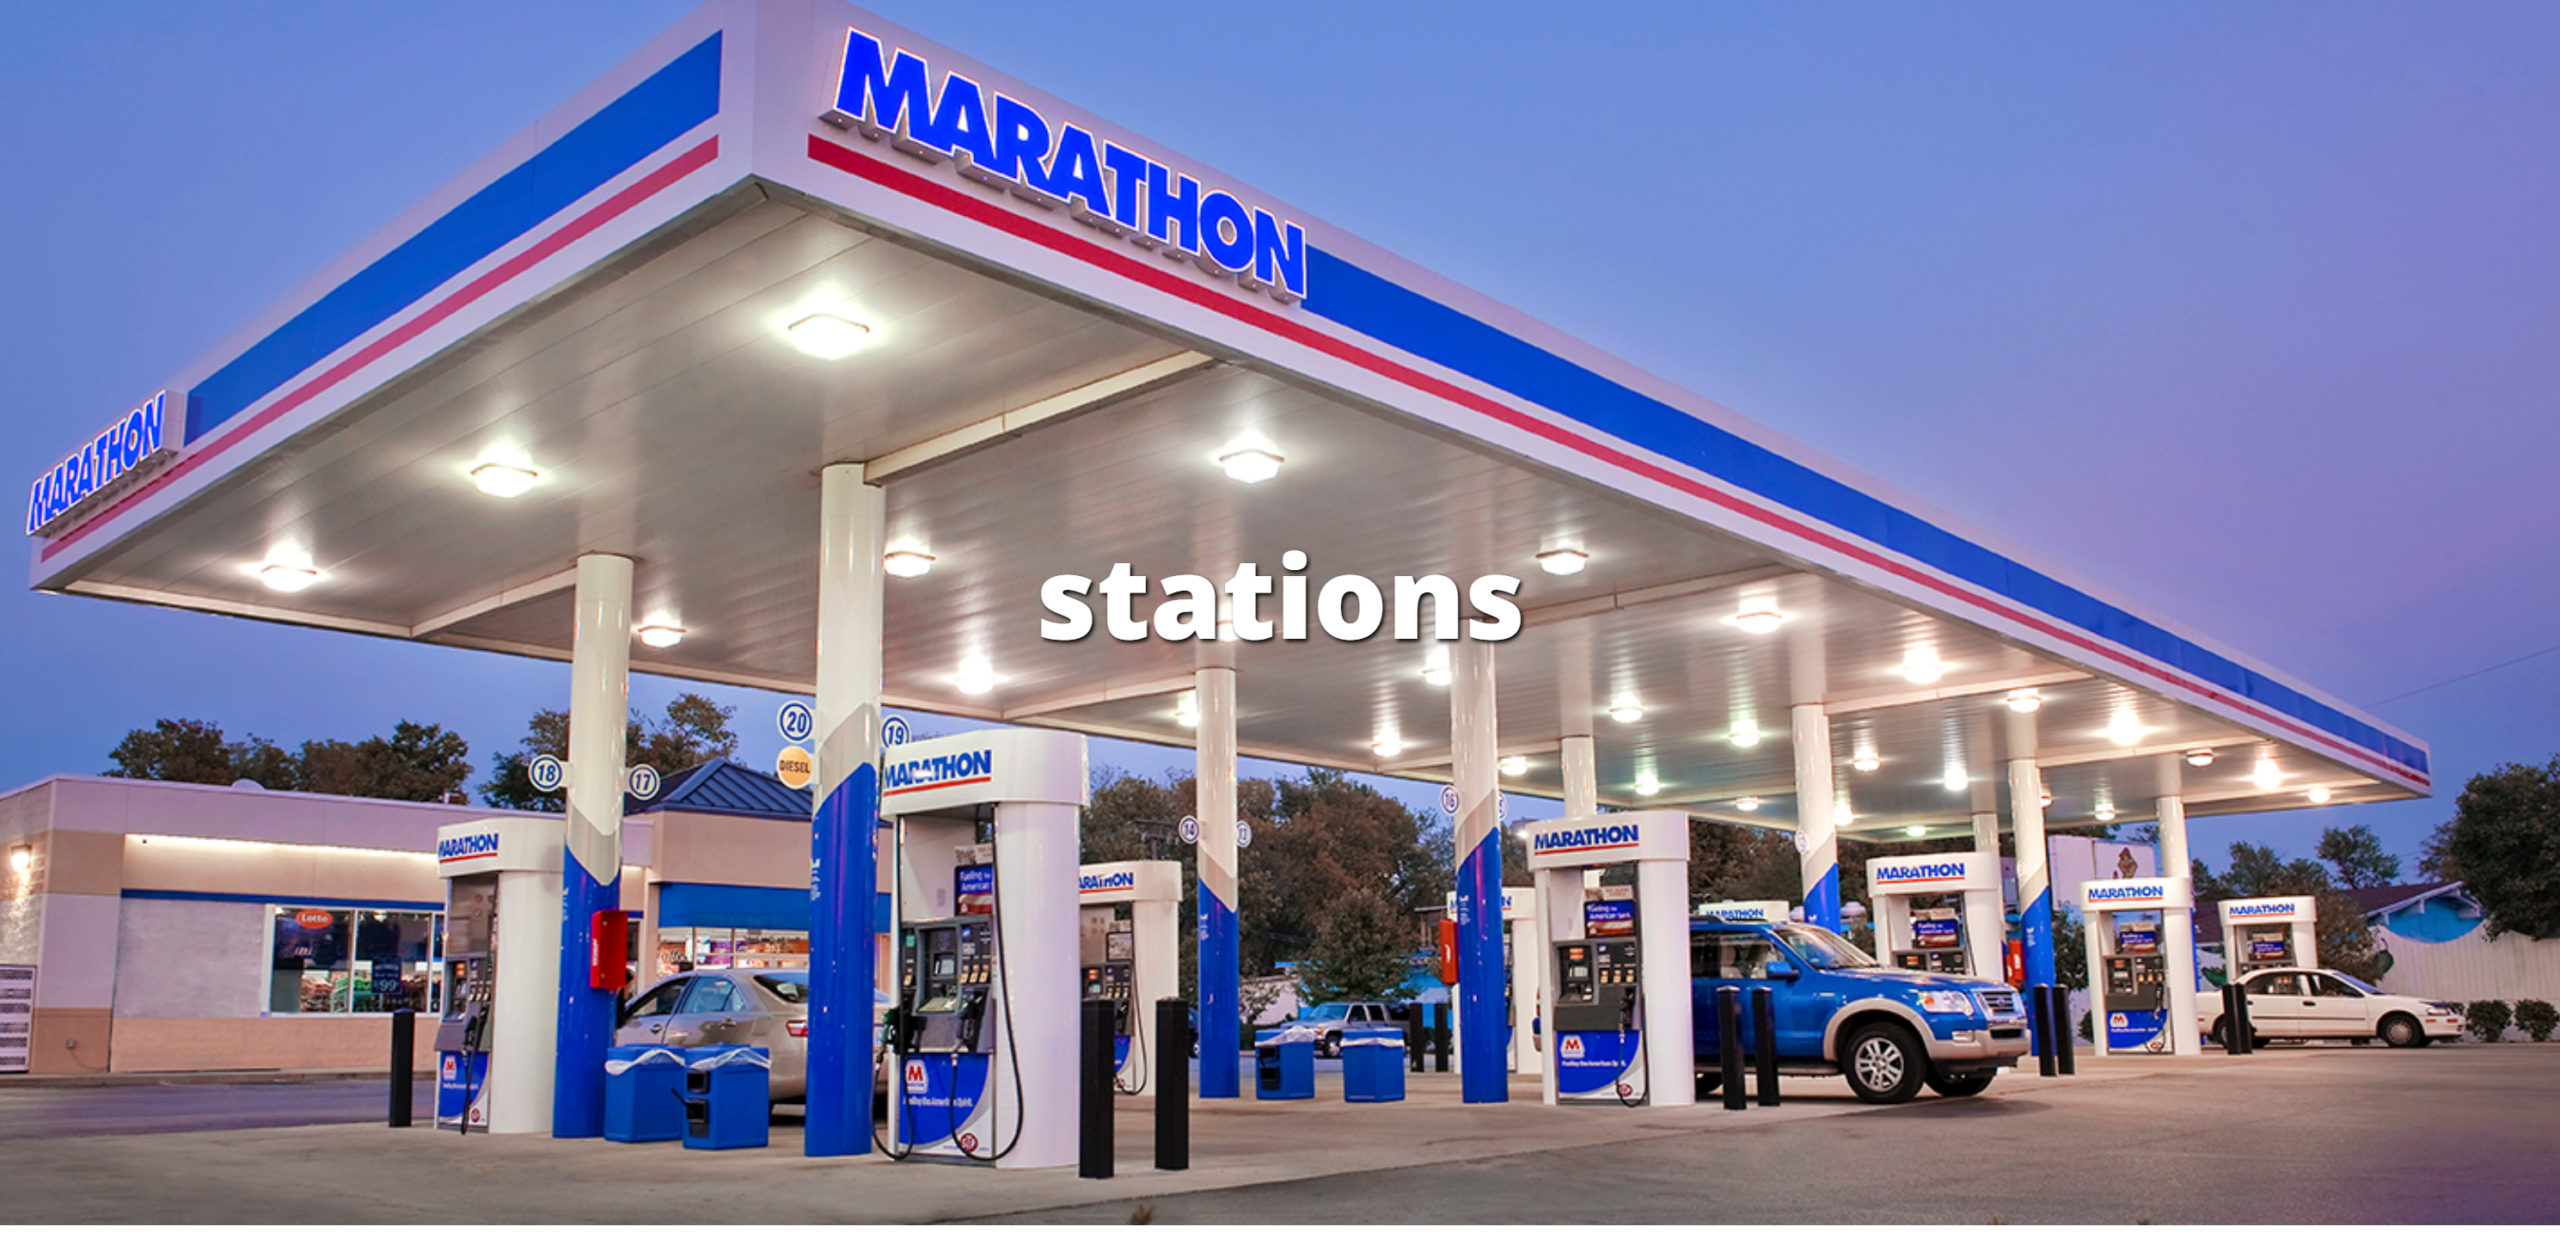 Marathon Gas Station Stores - Save Money with Marathon Stations